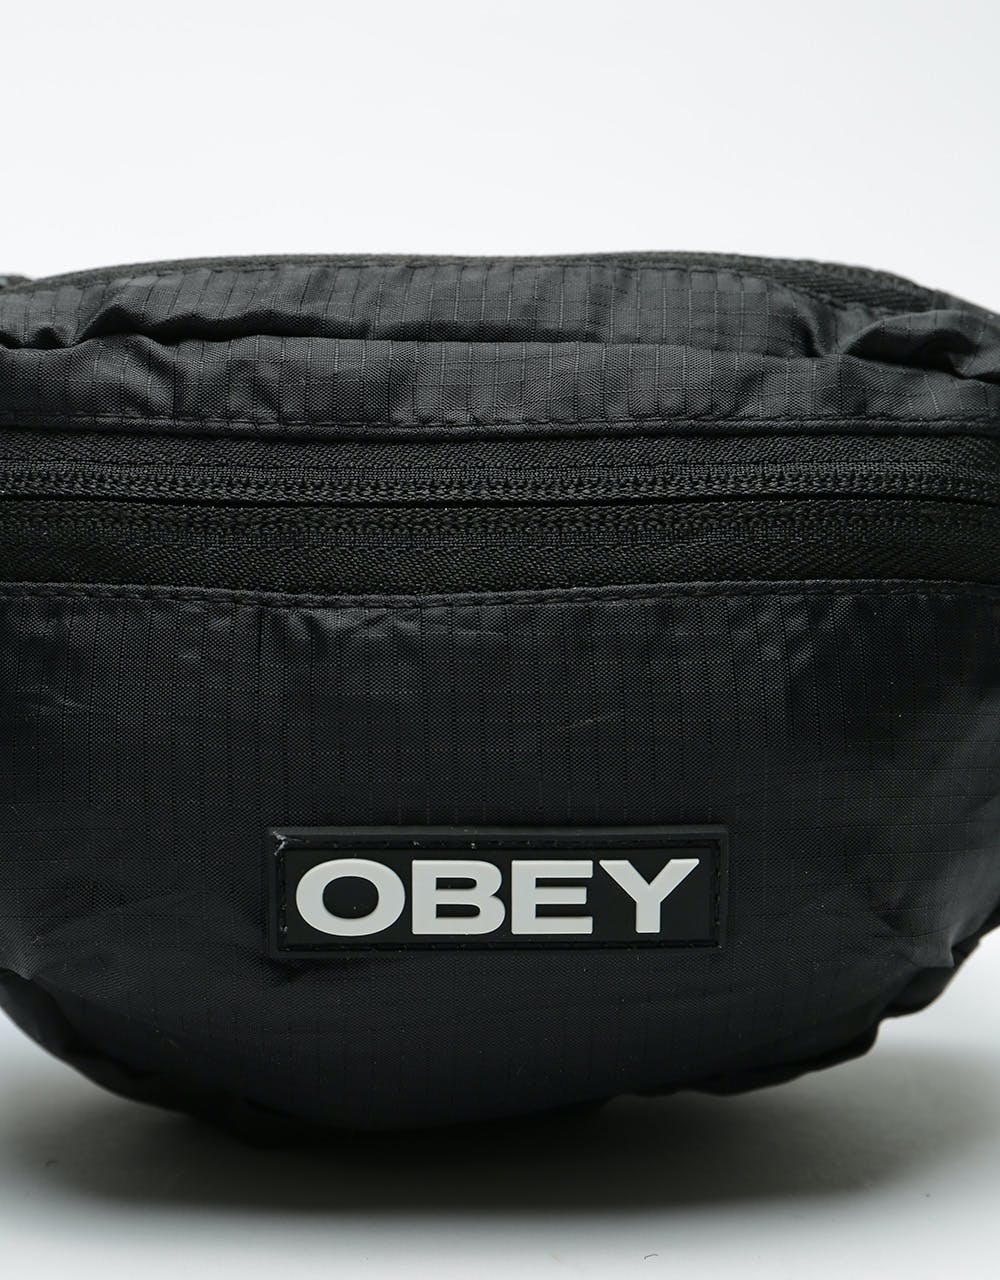 Obey Commuter Waist Cross Body Bag - Black